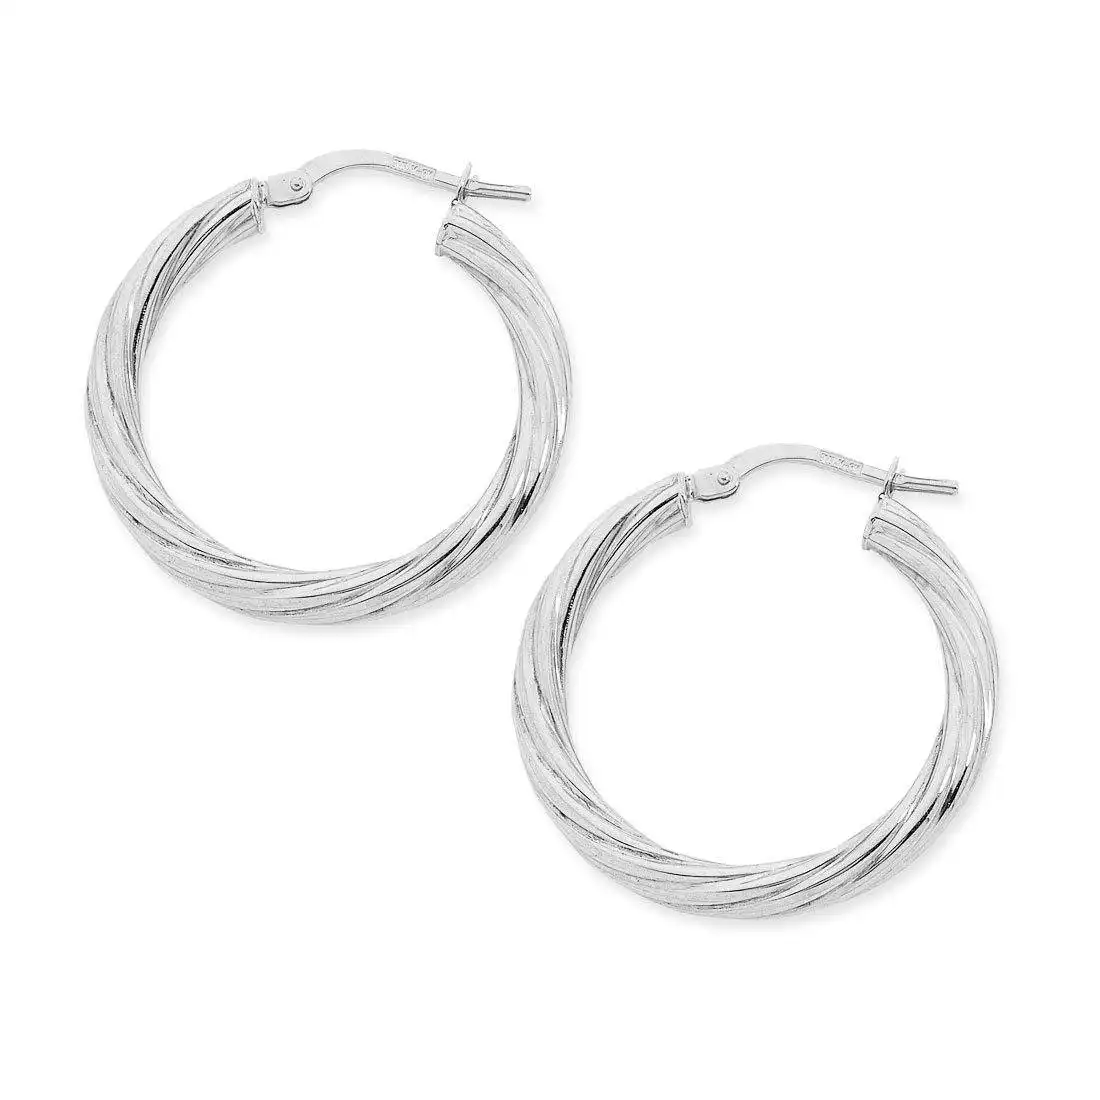 9ct White Gold Silver Infused Twist Hoop Earrings 2mm x 10mm